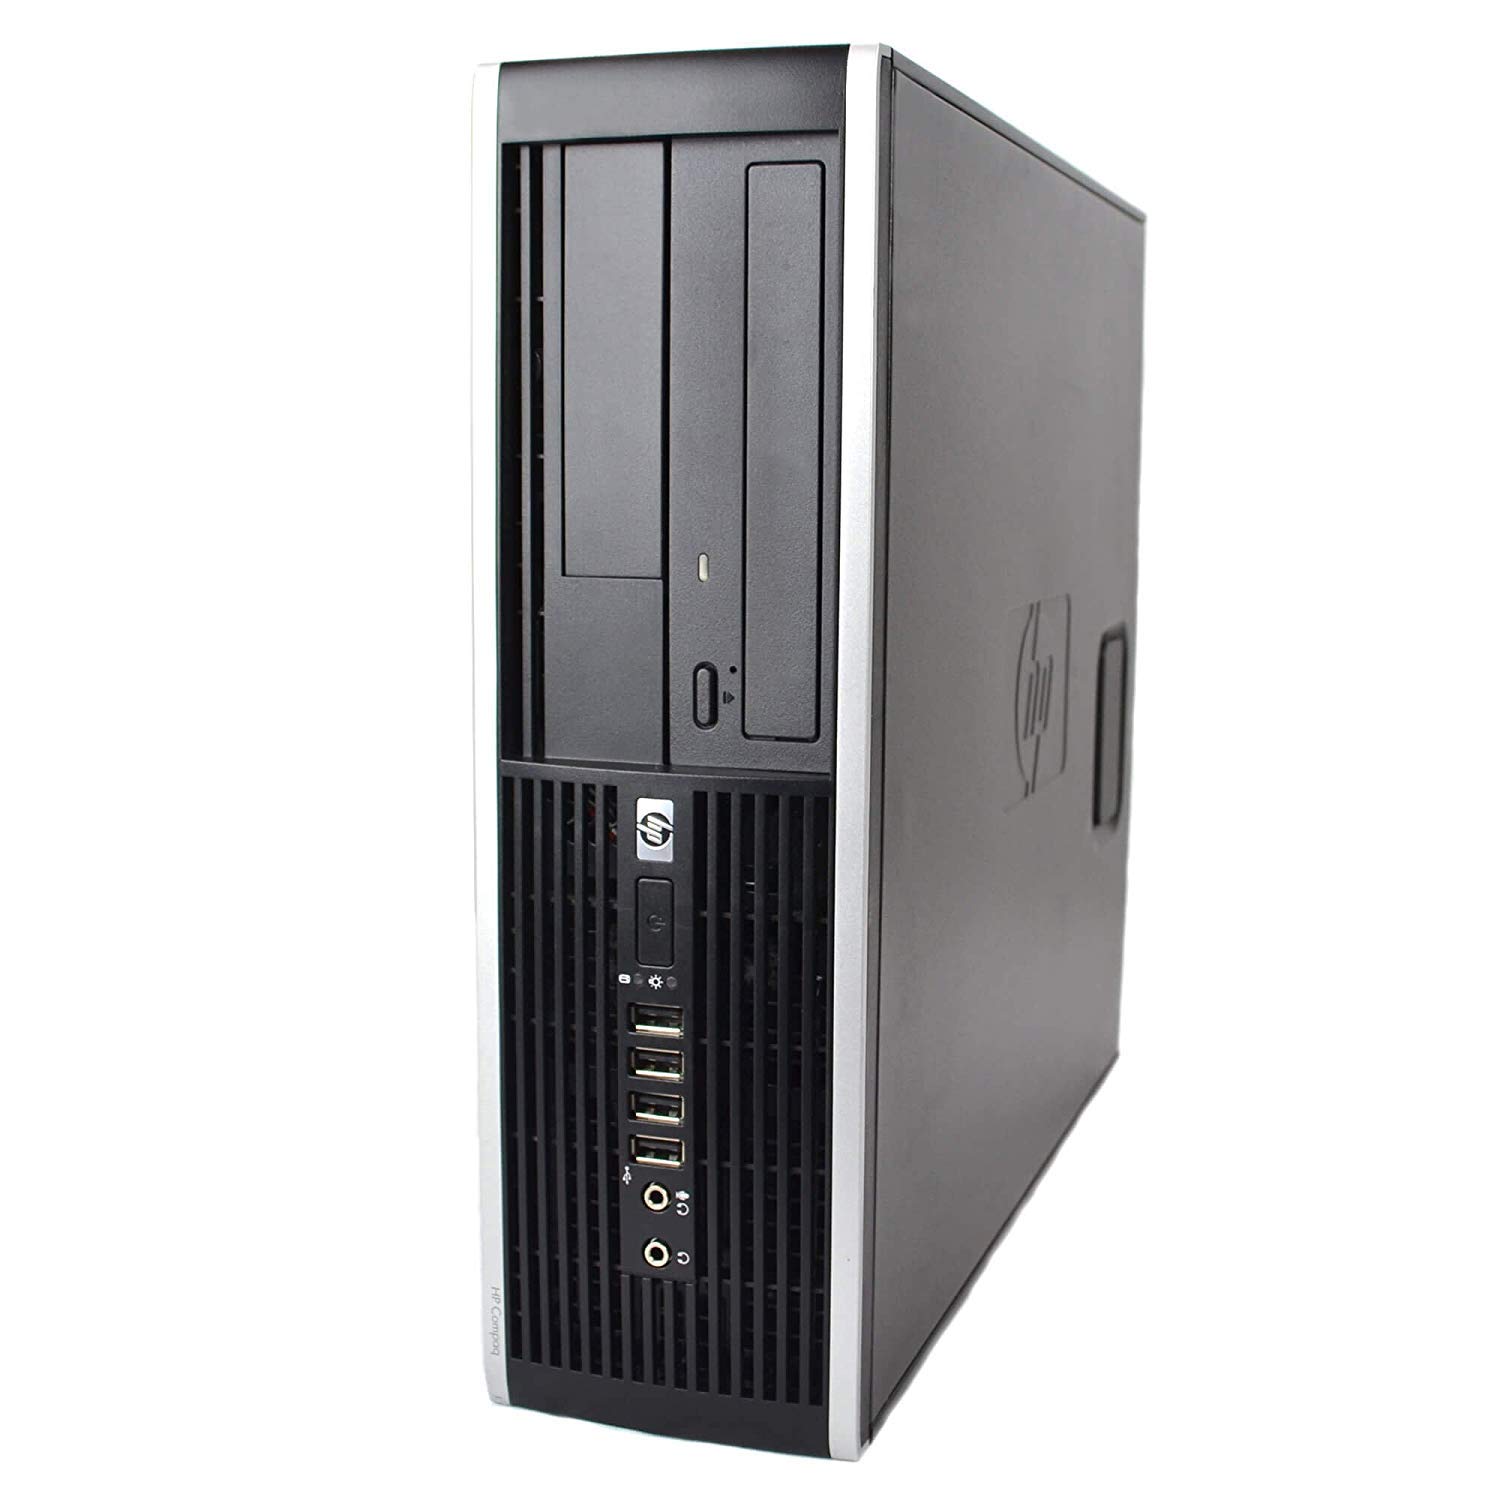 HP Compaq Prodesk 6200 Pro Slim Business Desktop Computer Small Form Factor (SFF), Intel i5-2400 Up to 3.4GHz, 8GB RAM, 128GB SSD, DVD, Windows 10 Pro 64 Bit (Renewed)